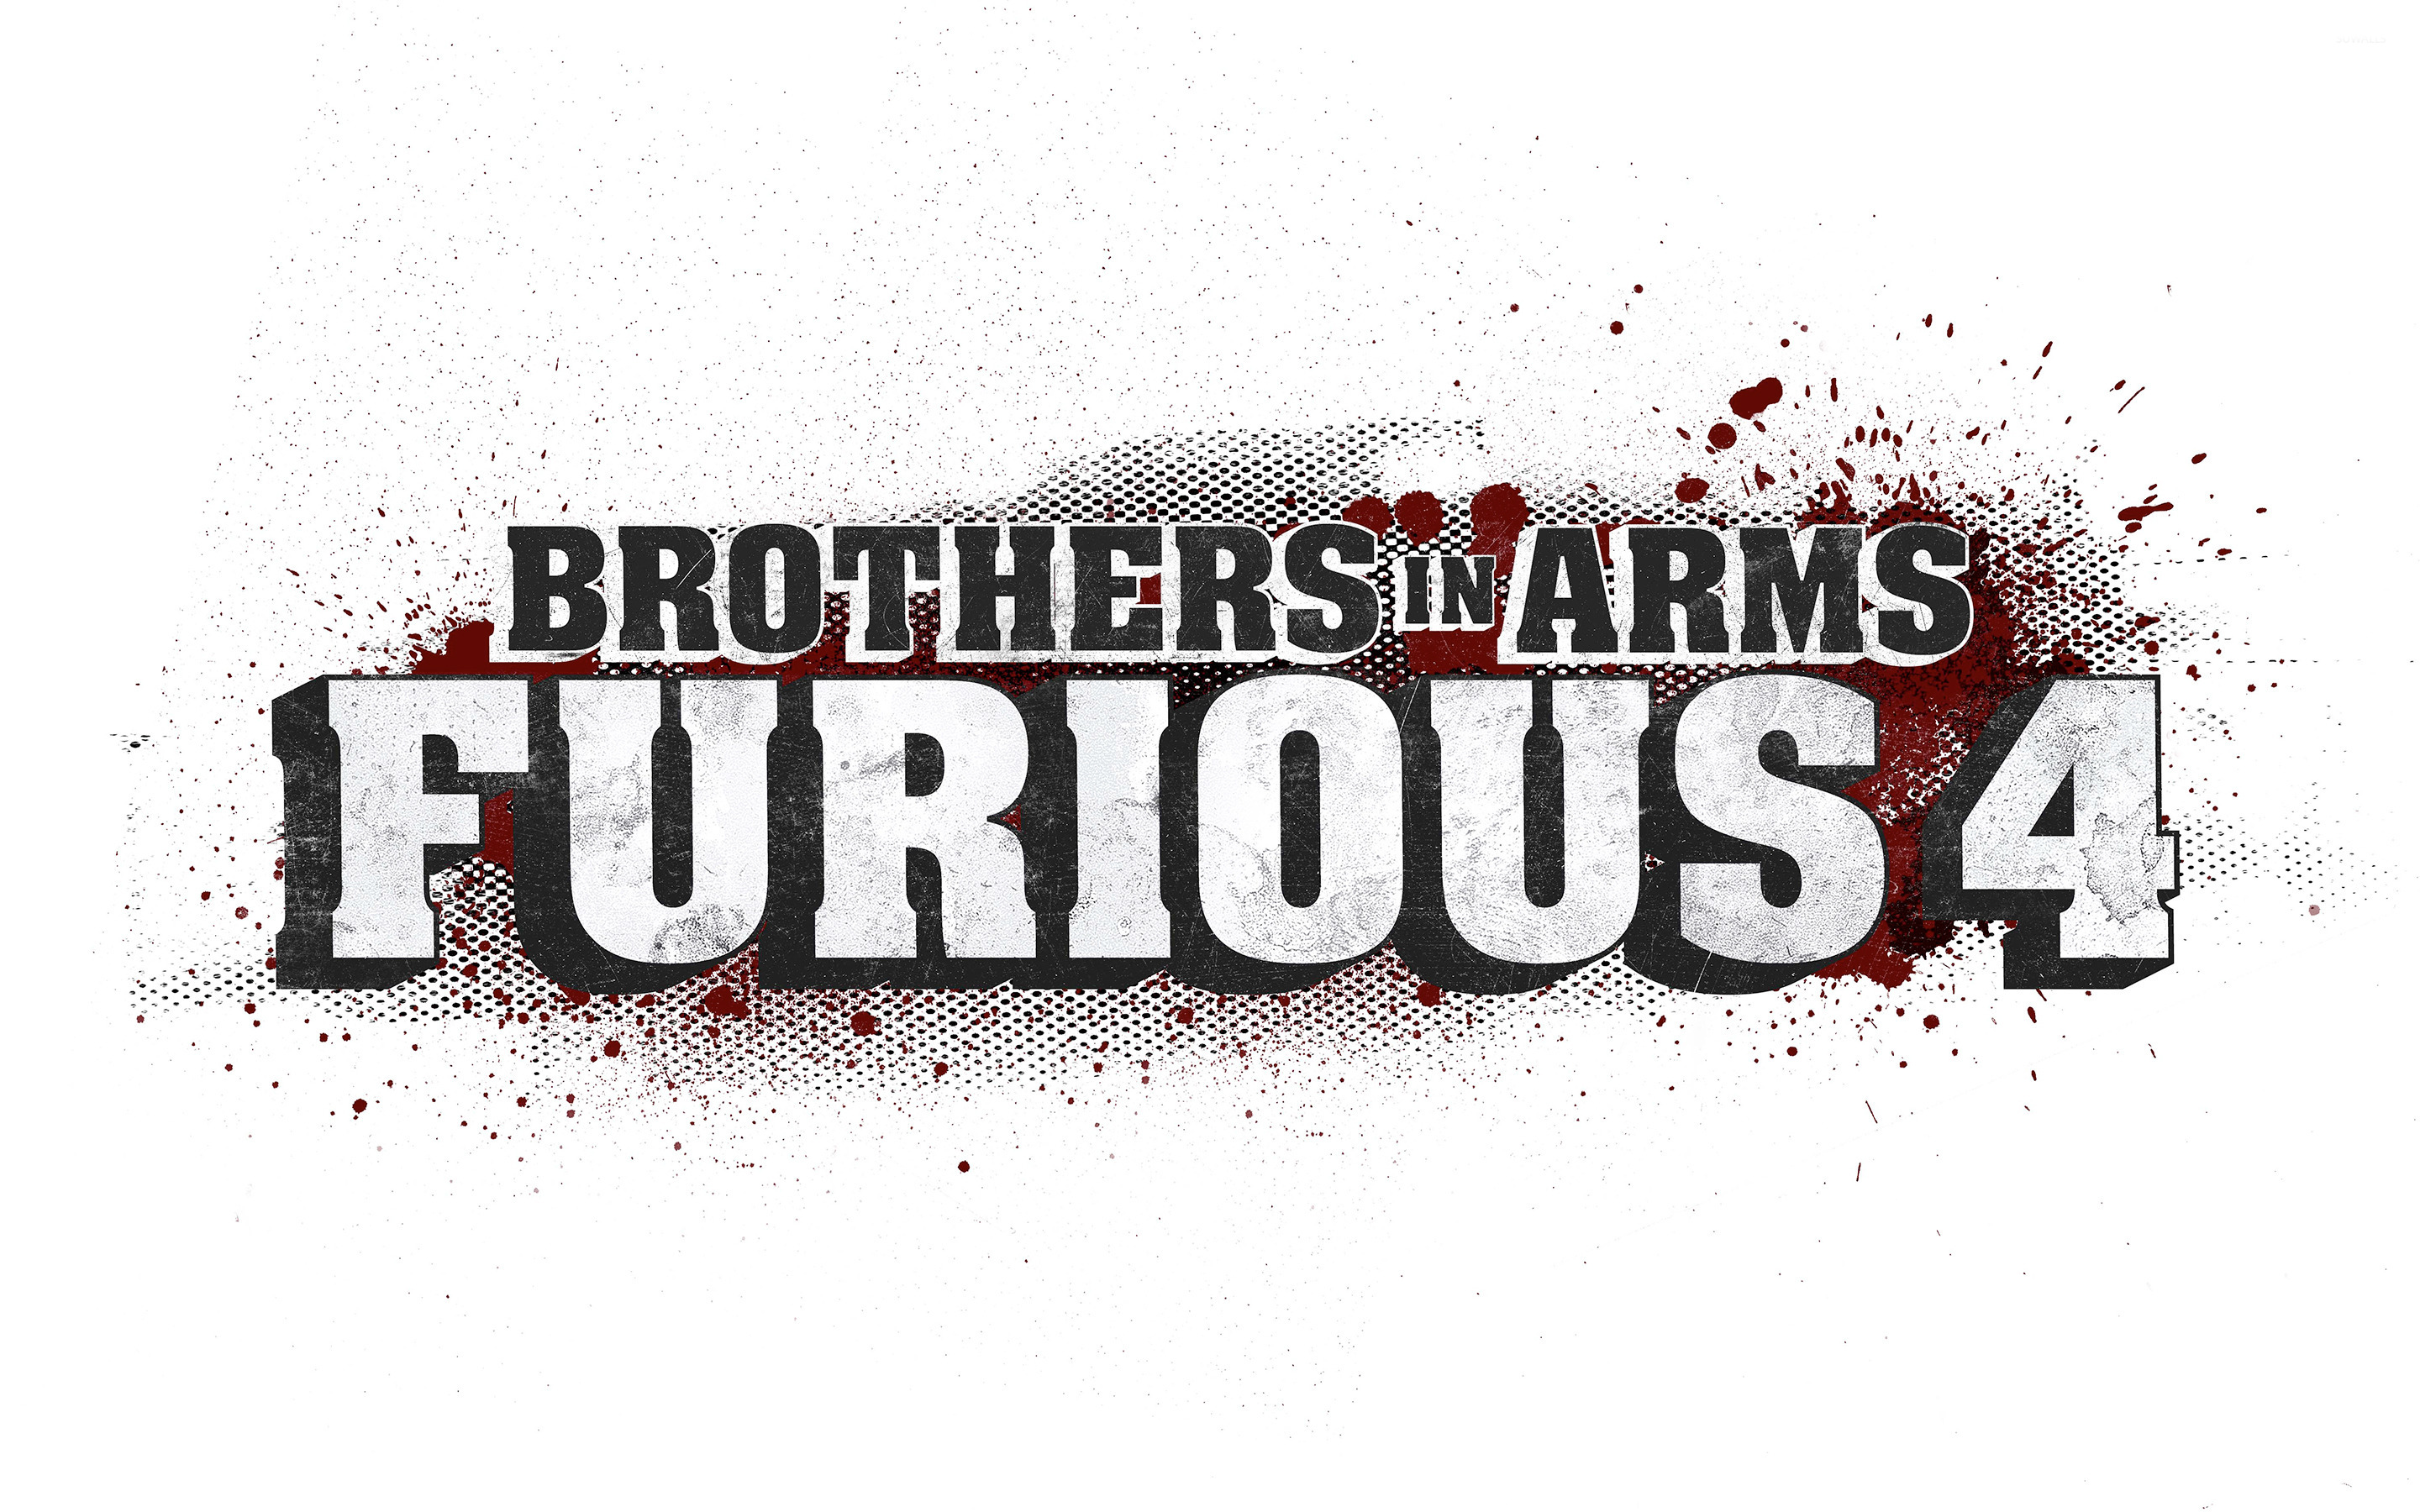 Brothers 4 life. Brothers in Arms: Furious 4. Brothers in Arms логотип. Brothers in Arms: Furious 4 [править | править код]. Эмблема Форсаж.